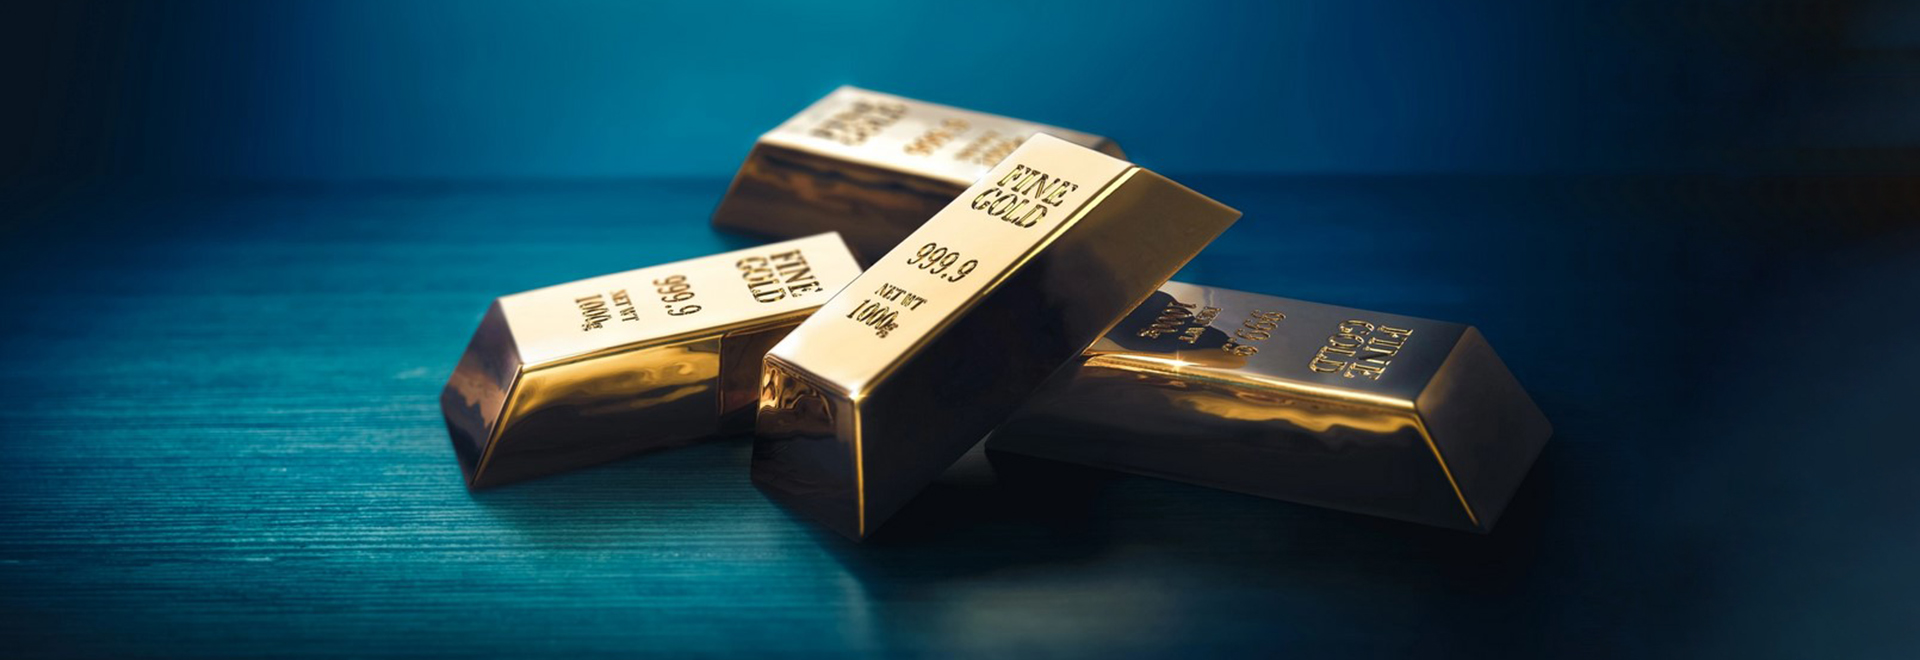 Gold Price Gains Momentum